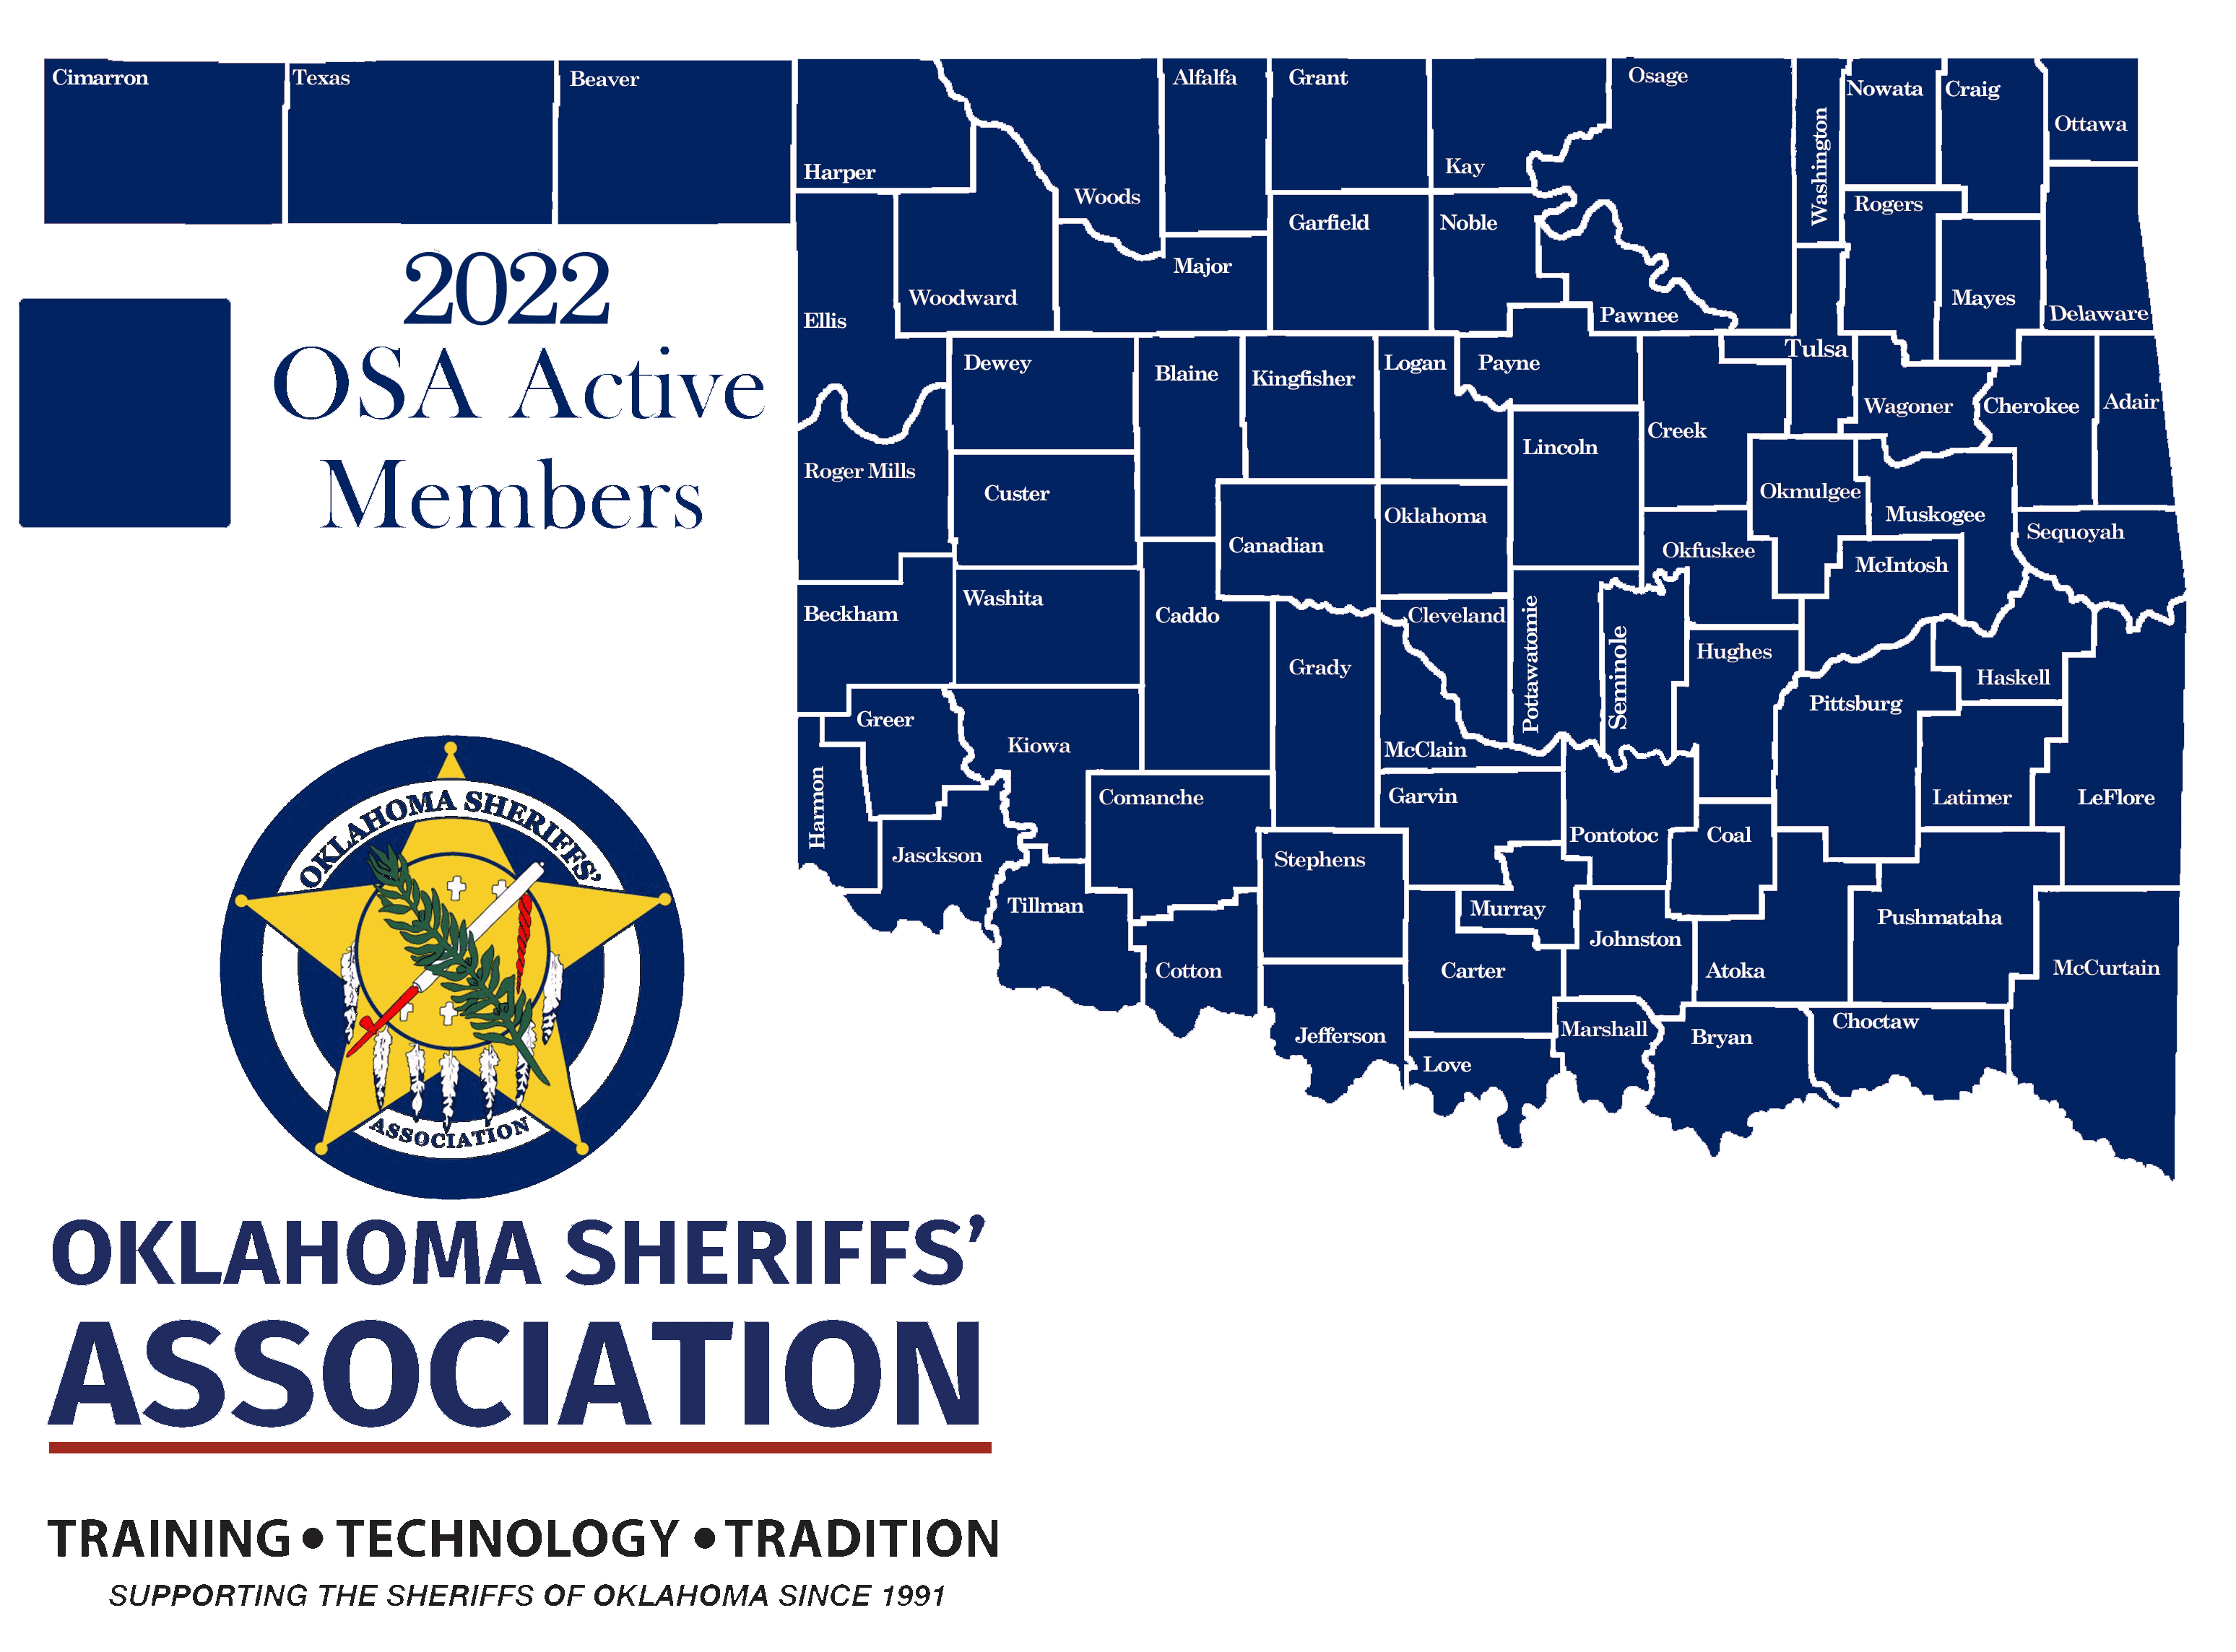 Oklahoma Sheriffs' Association